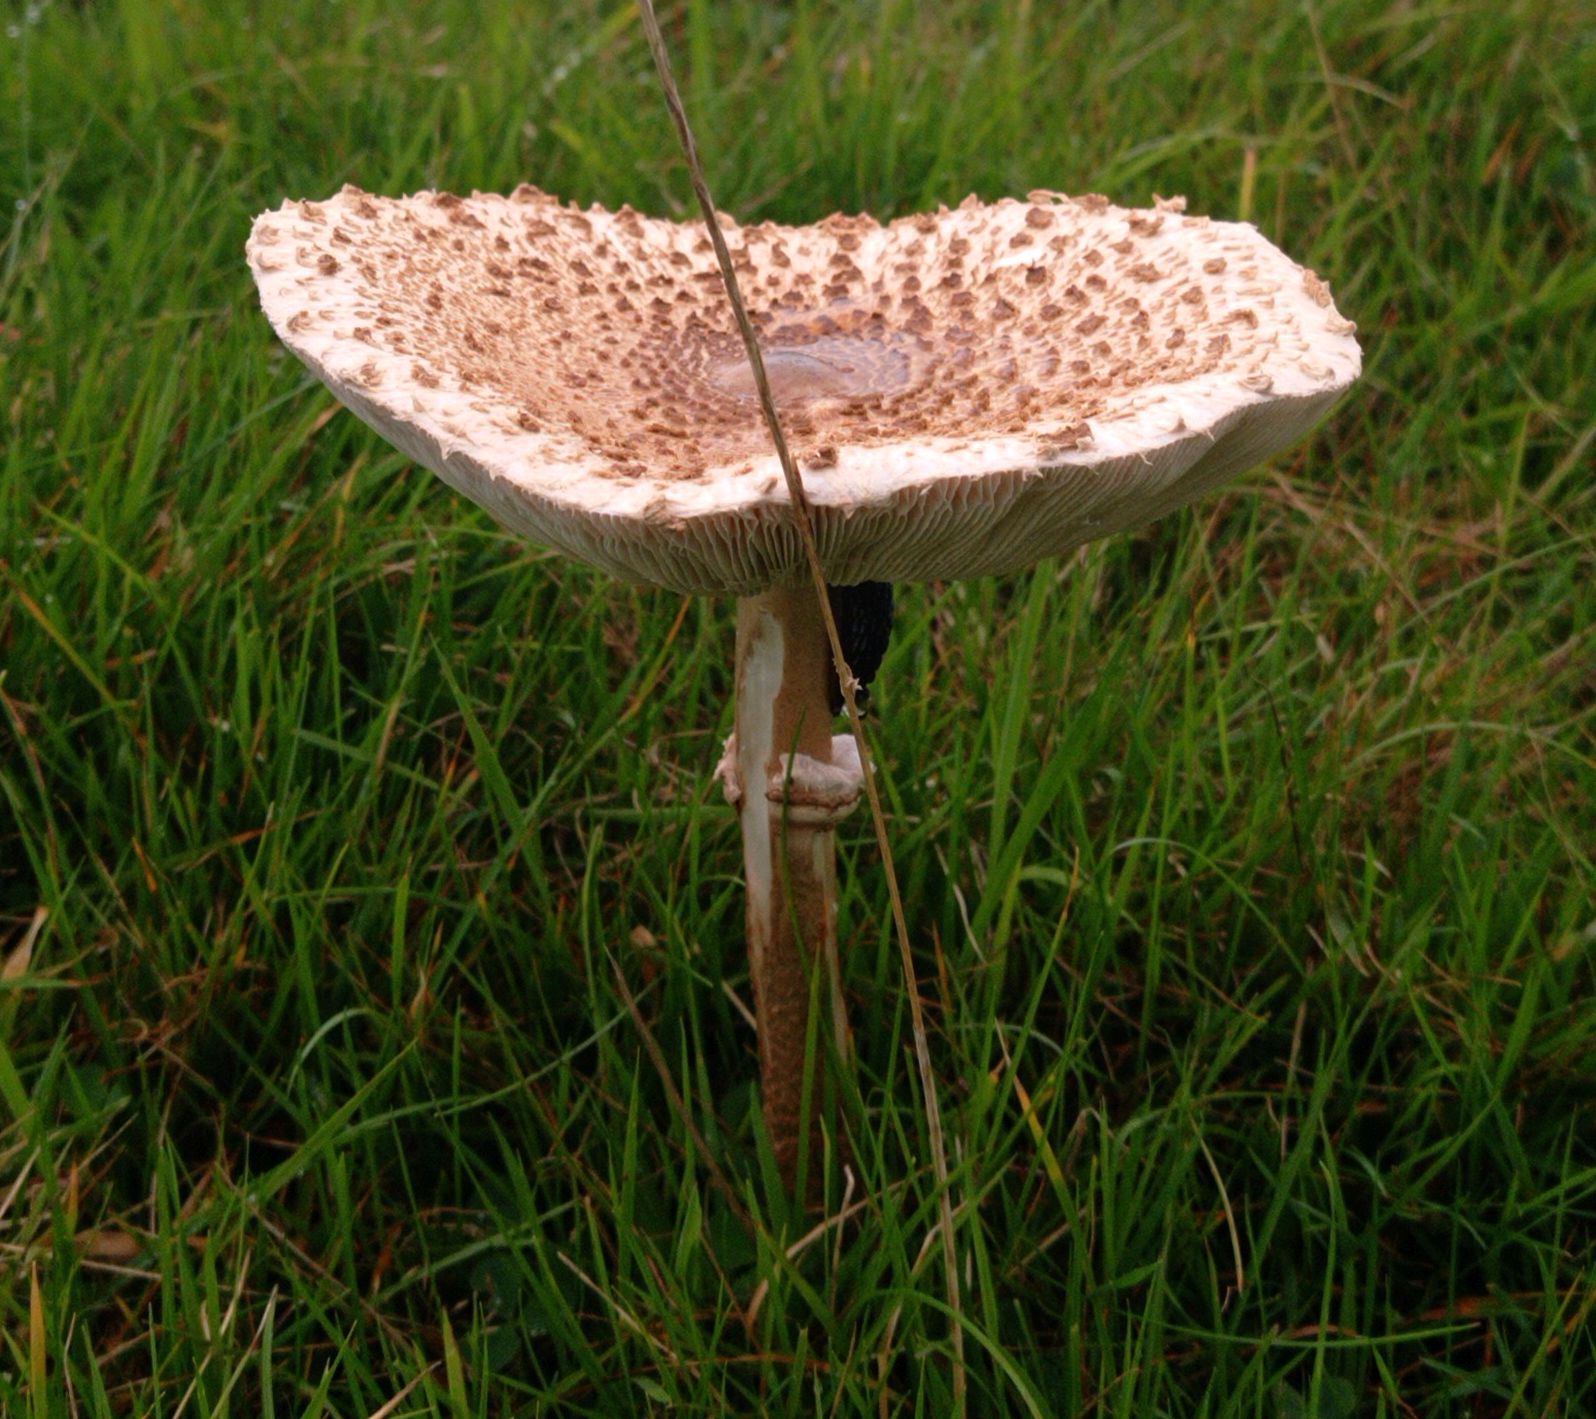 Parasol mushroom with slug